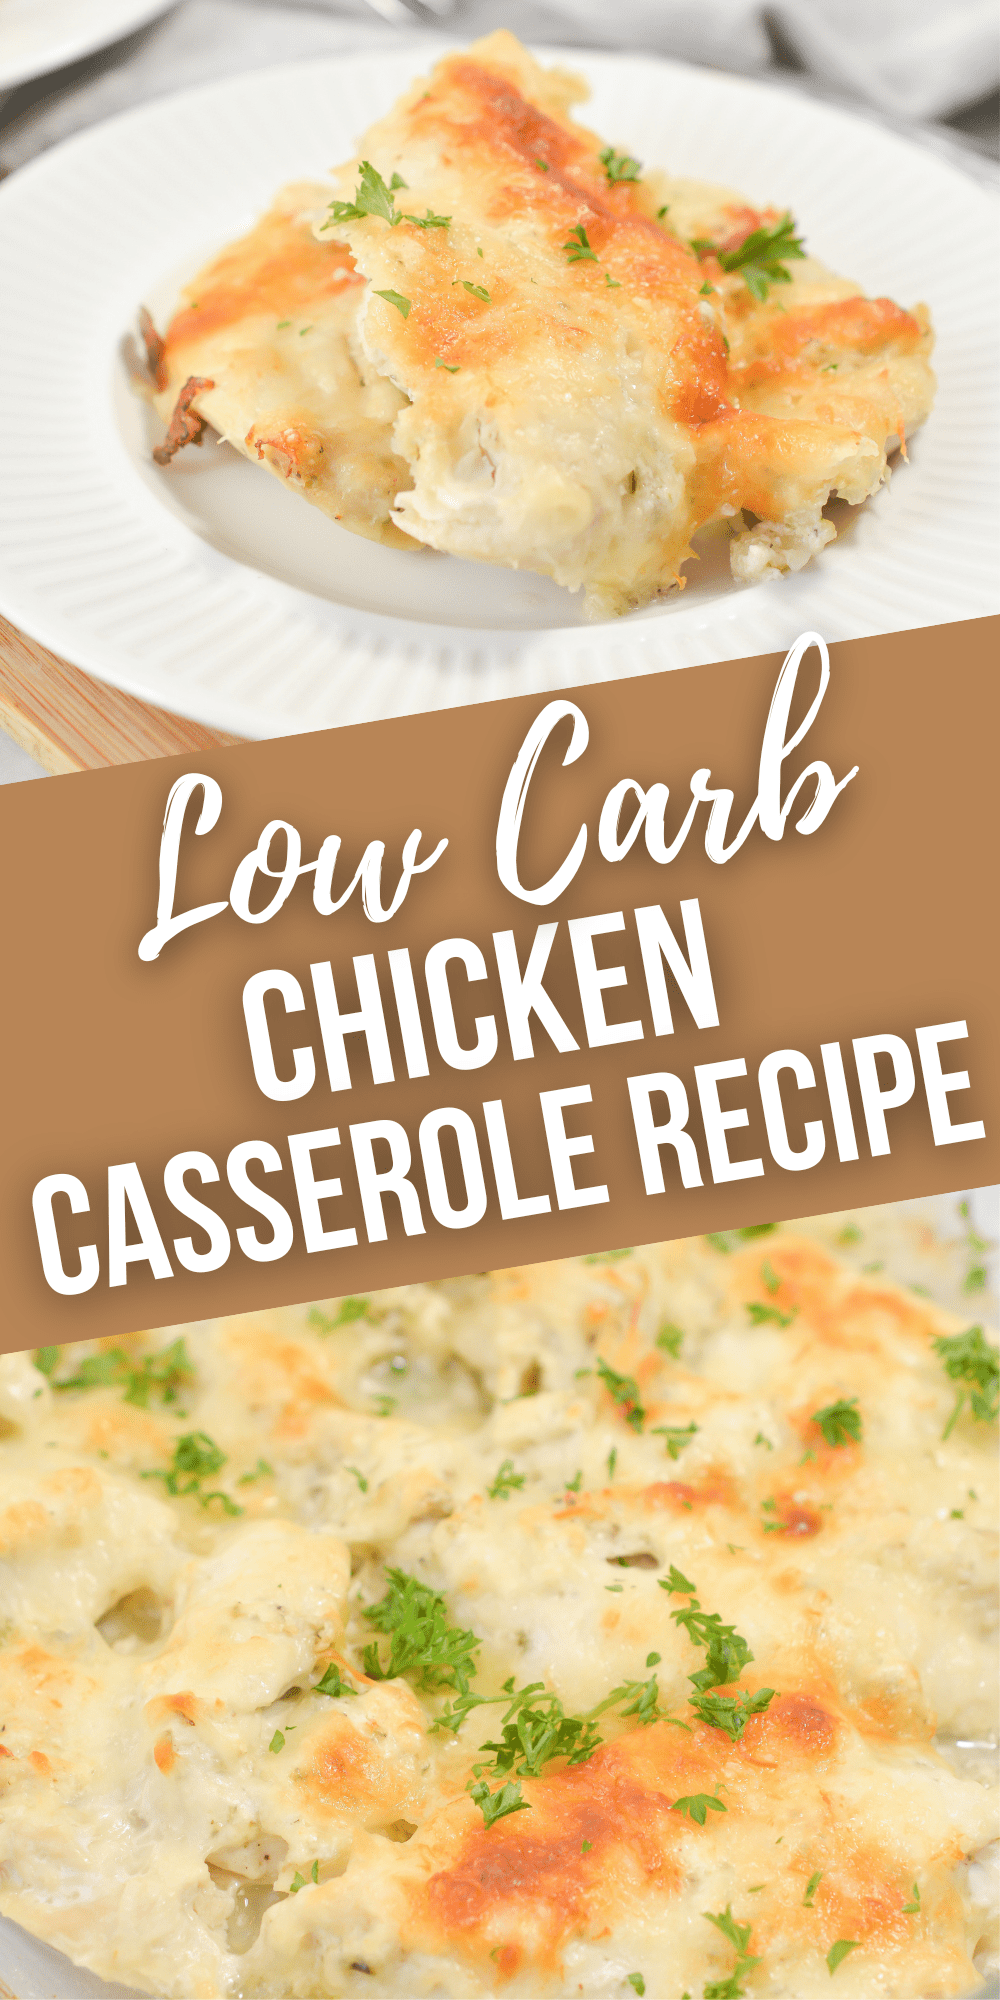 Low Carb Chicken Casserole Recipe | More Chicken Recipes